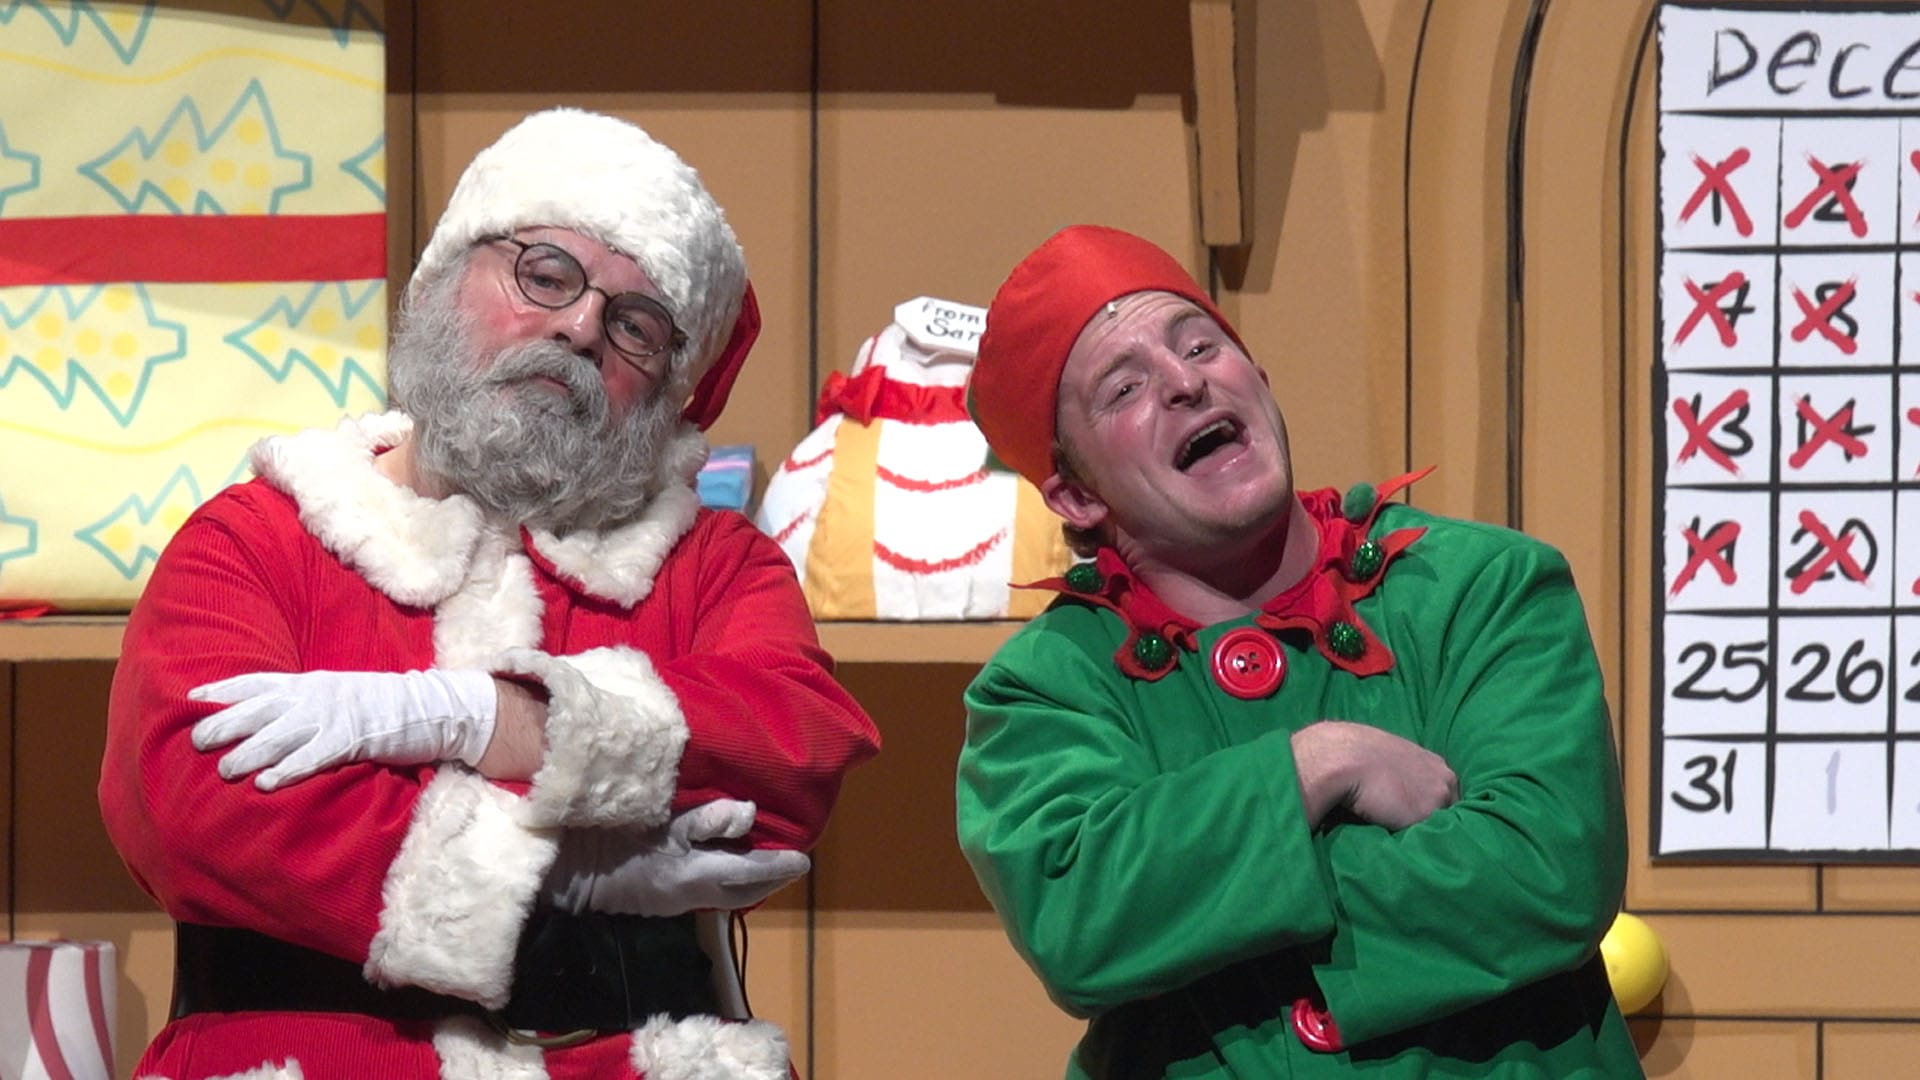 Santa and an elf sing a song